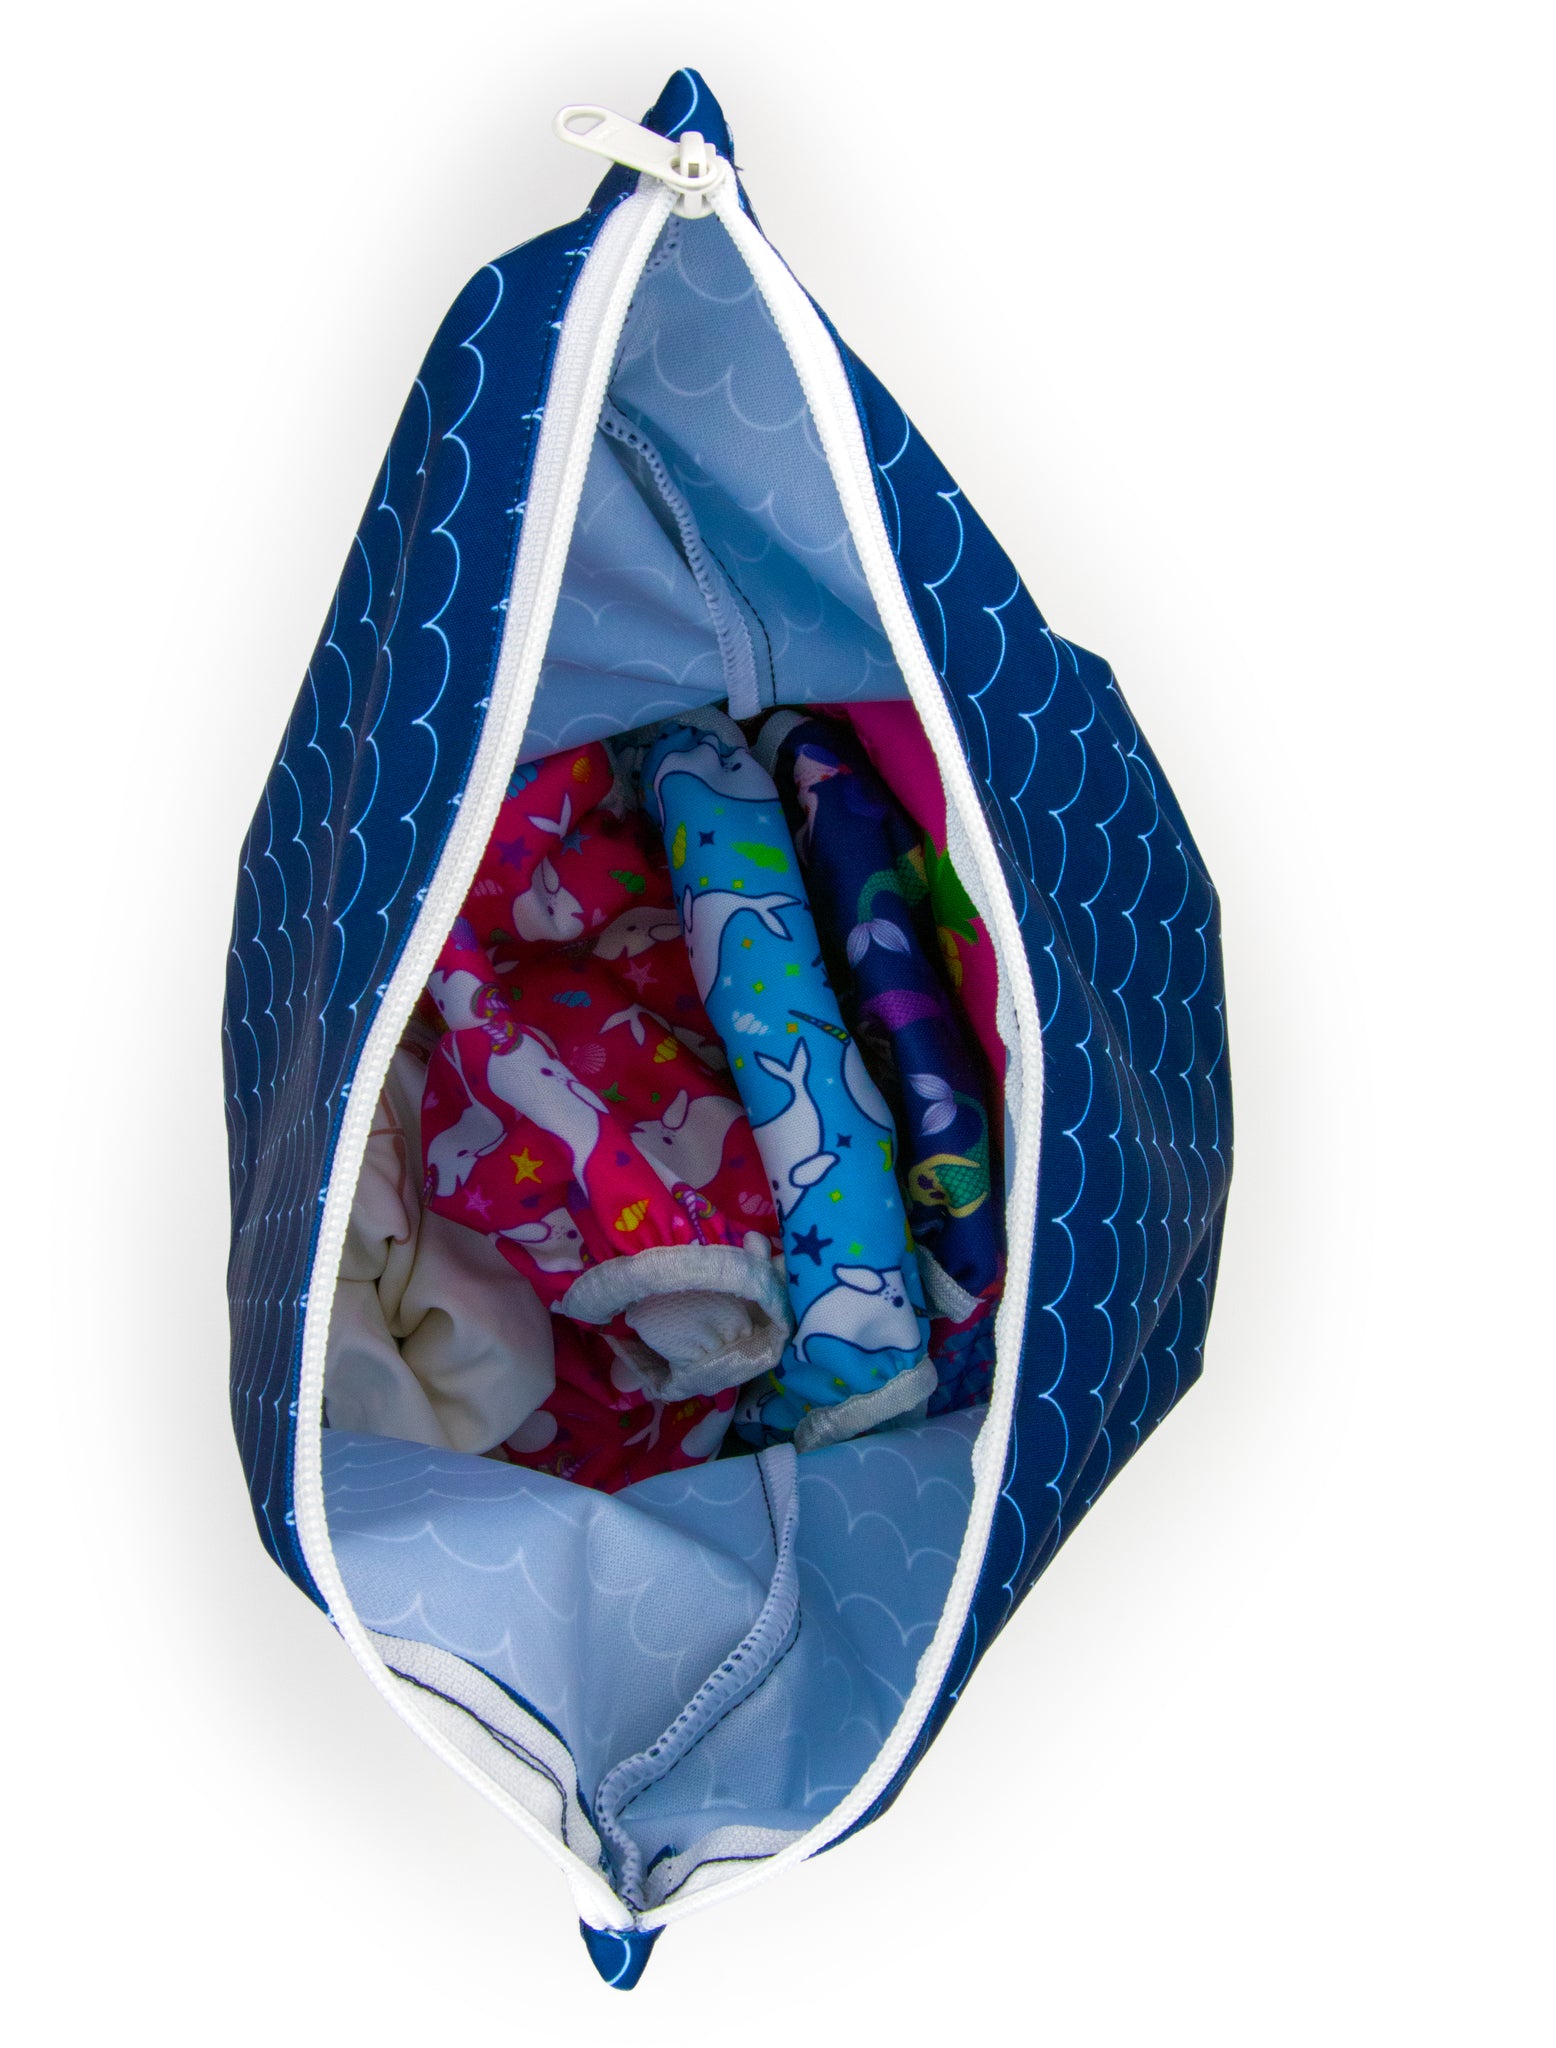 Beau Belle Littles wet bag with reusable swim diaper inside.